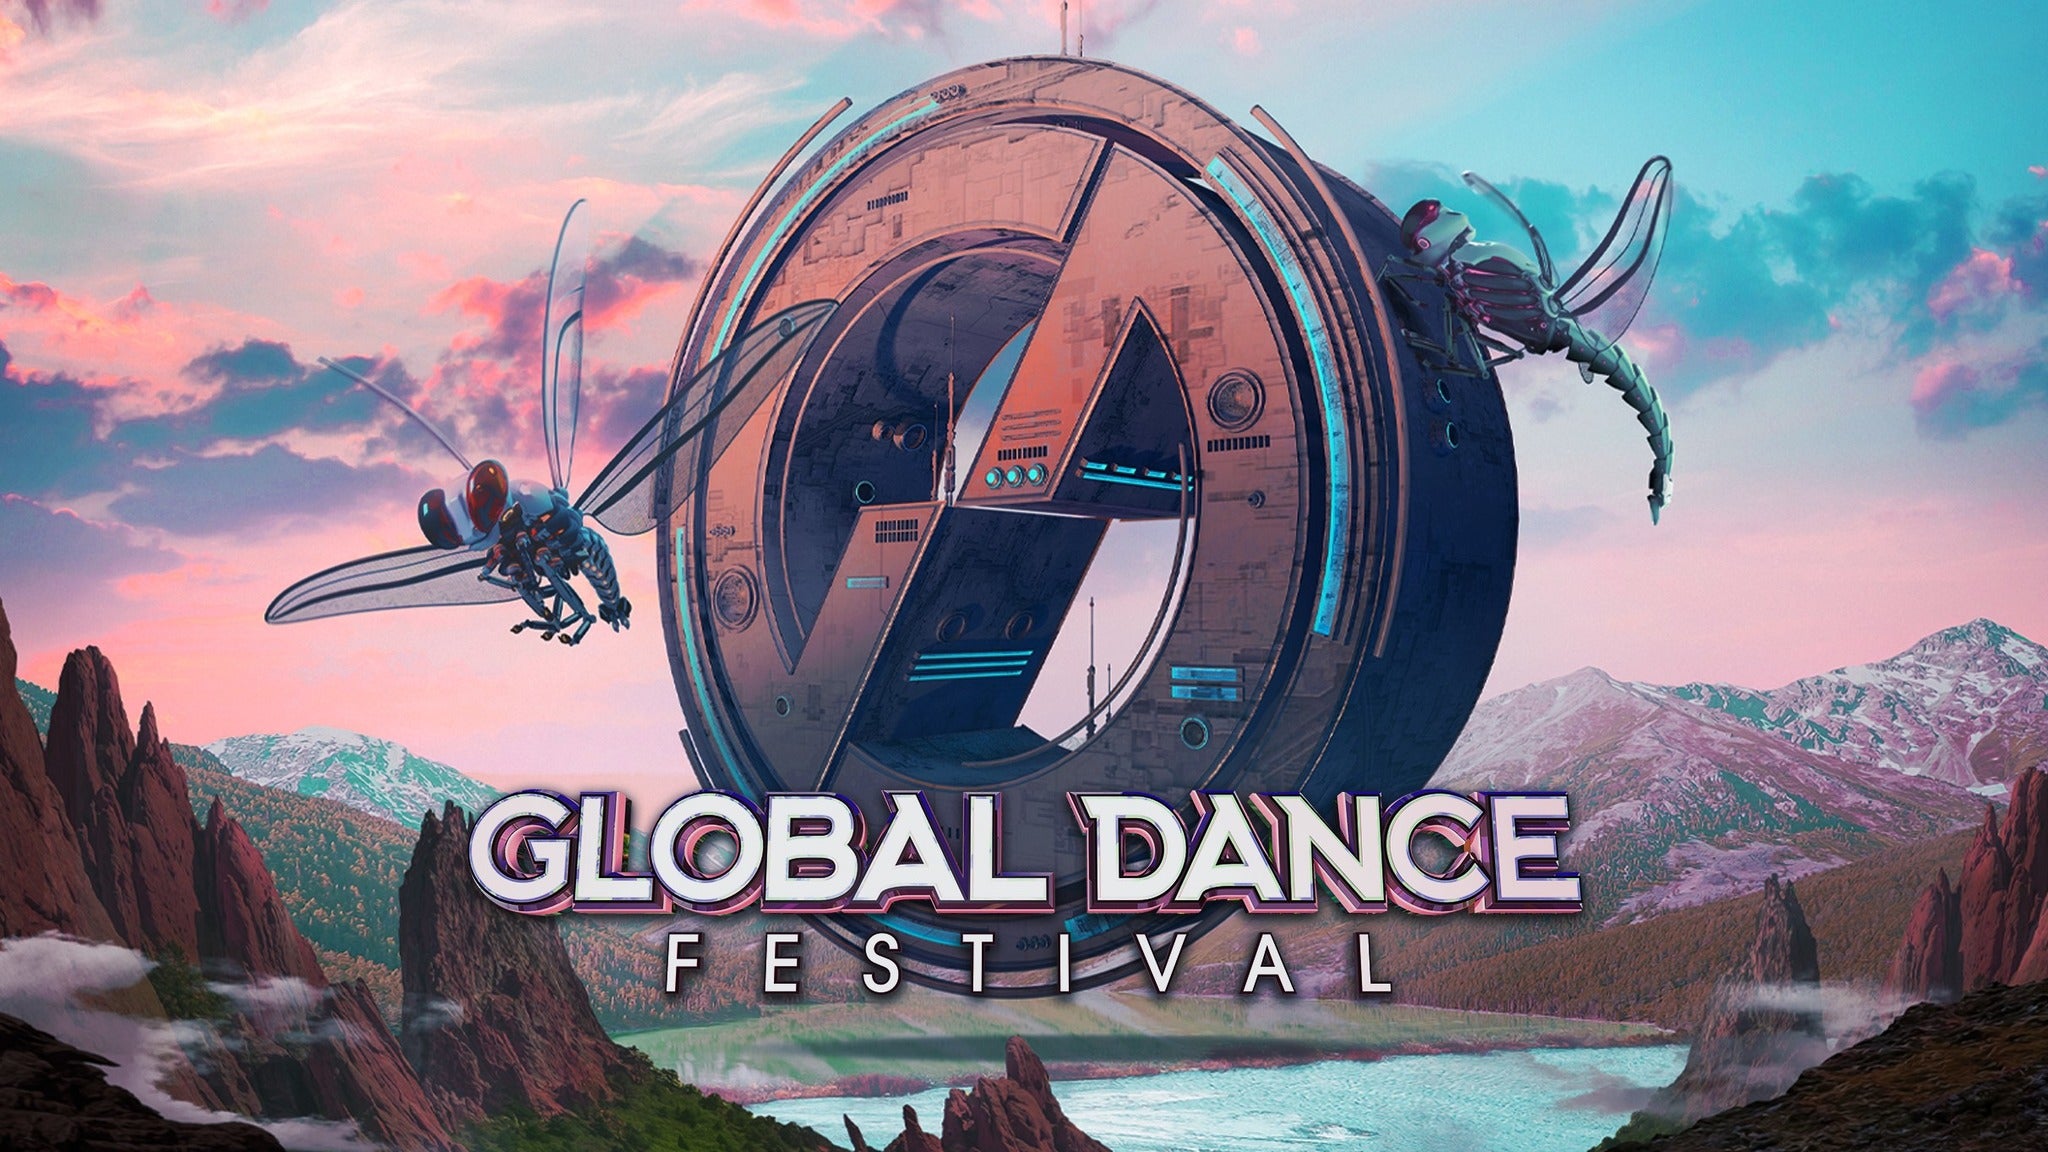 Global Dance Festival - 2 Day Pass